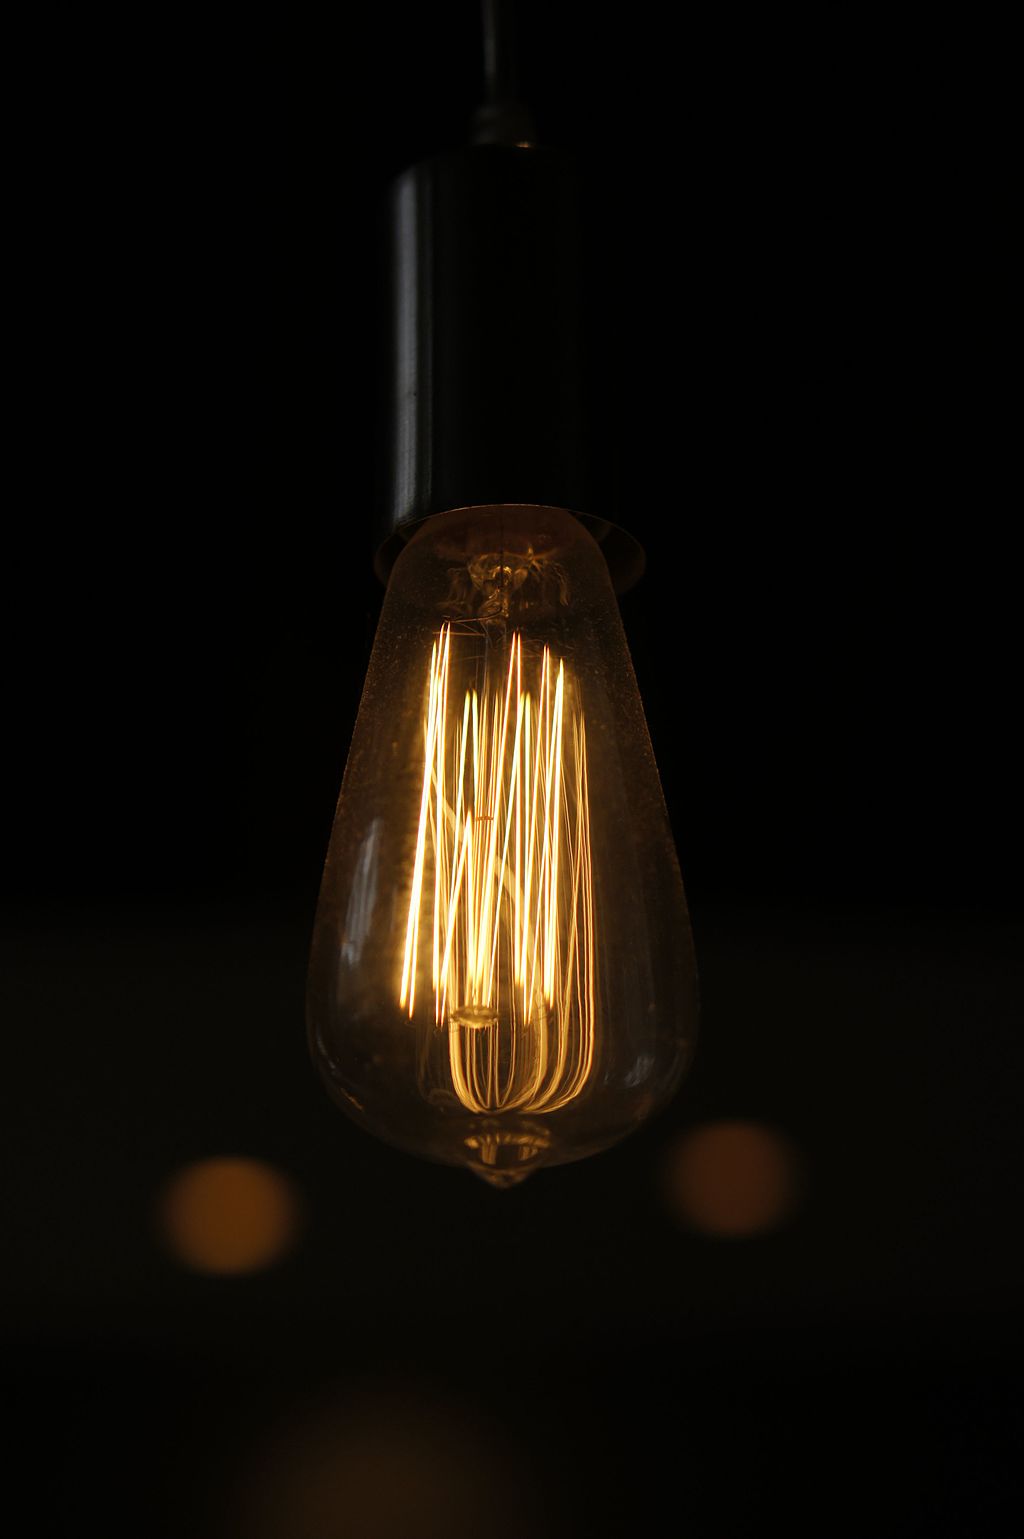 Edison light bulb